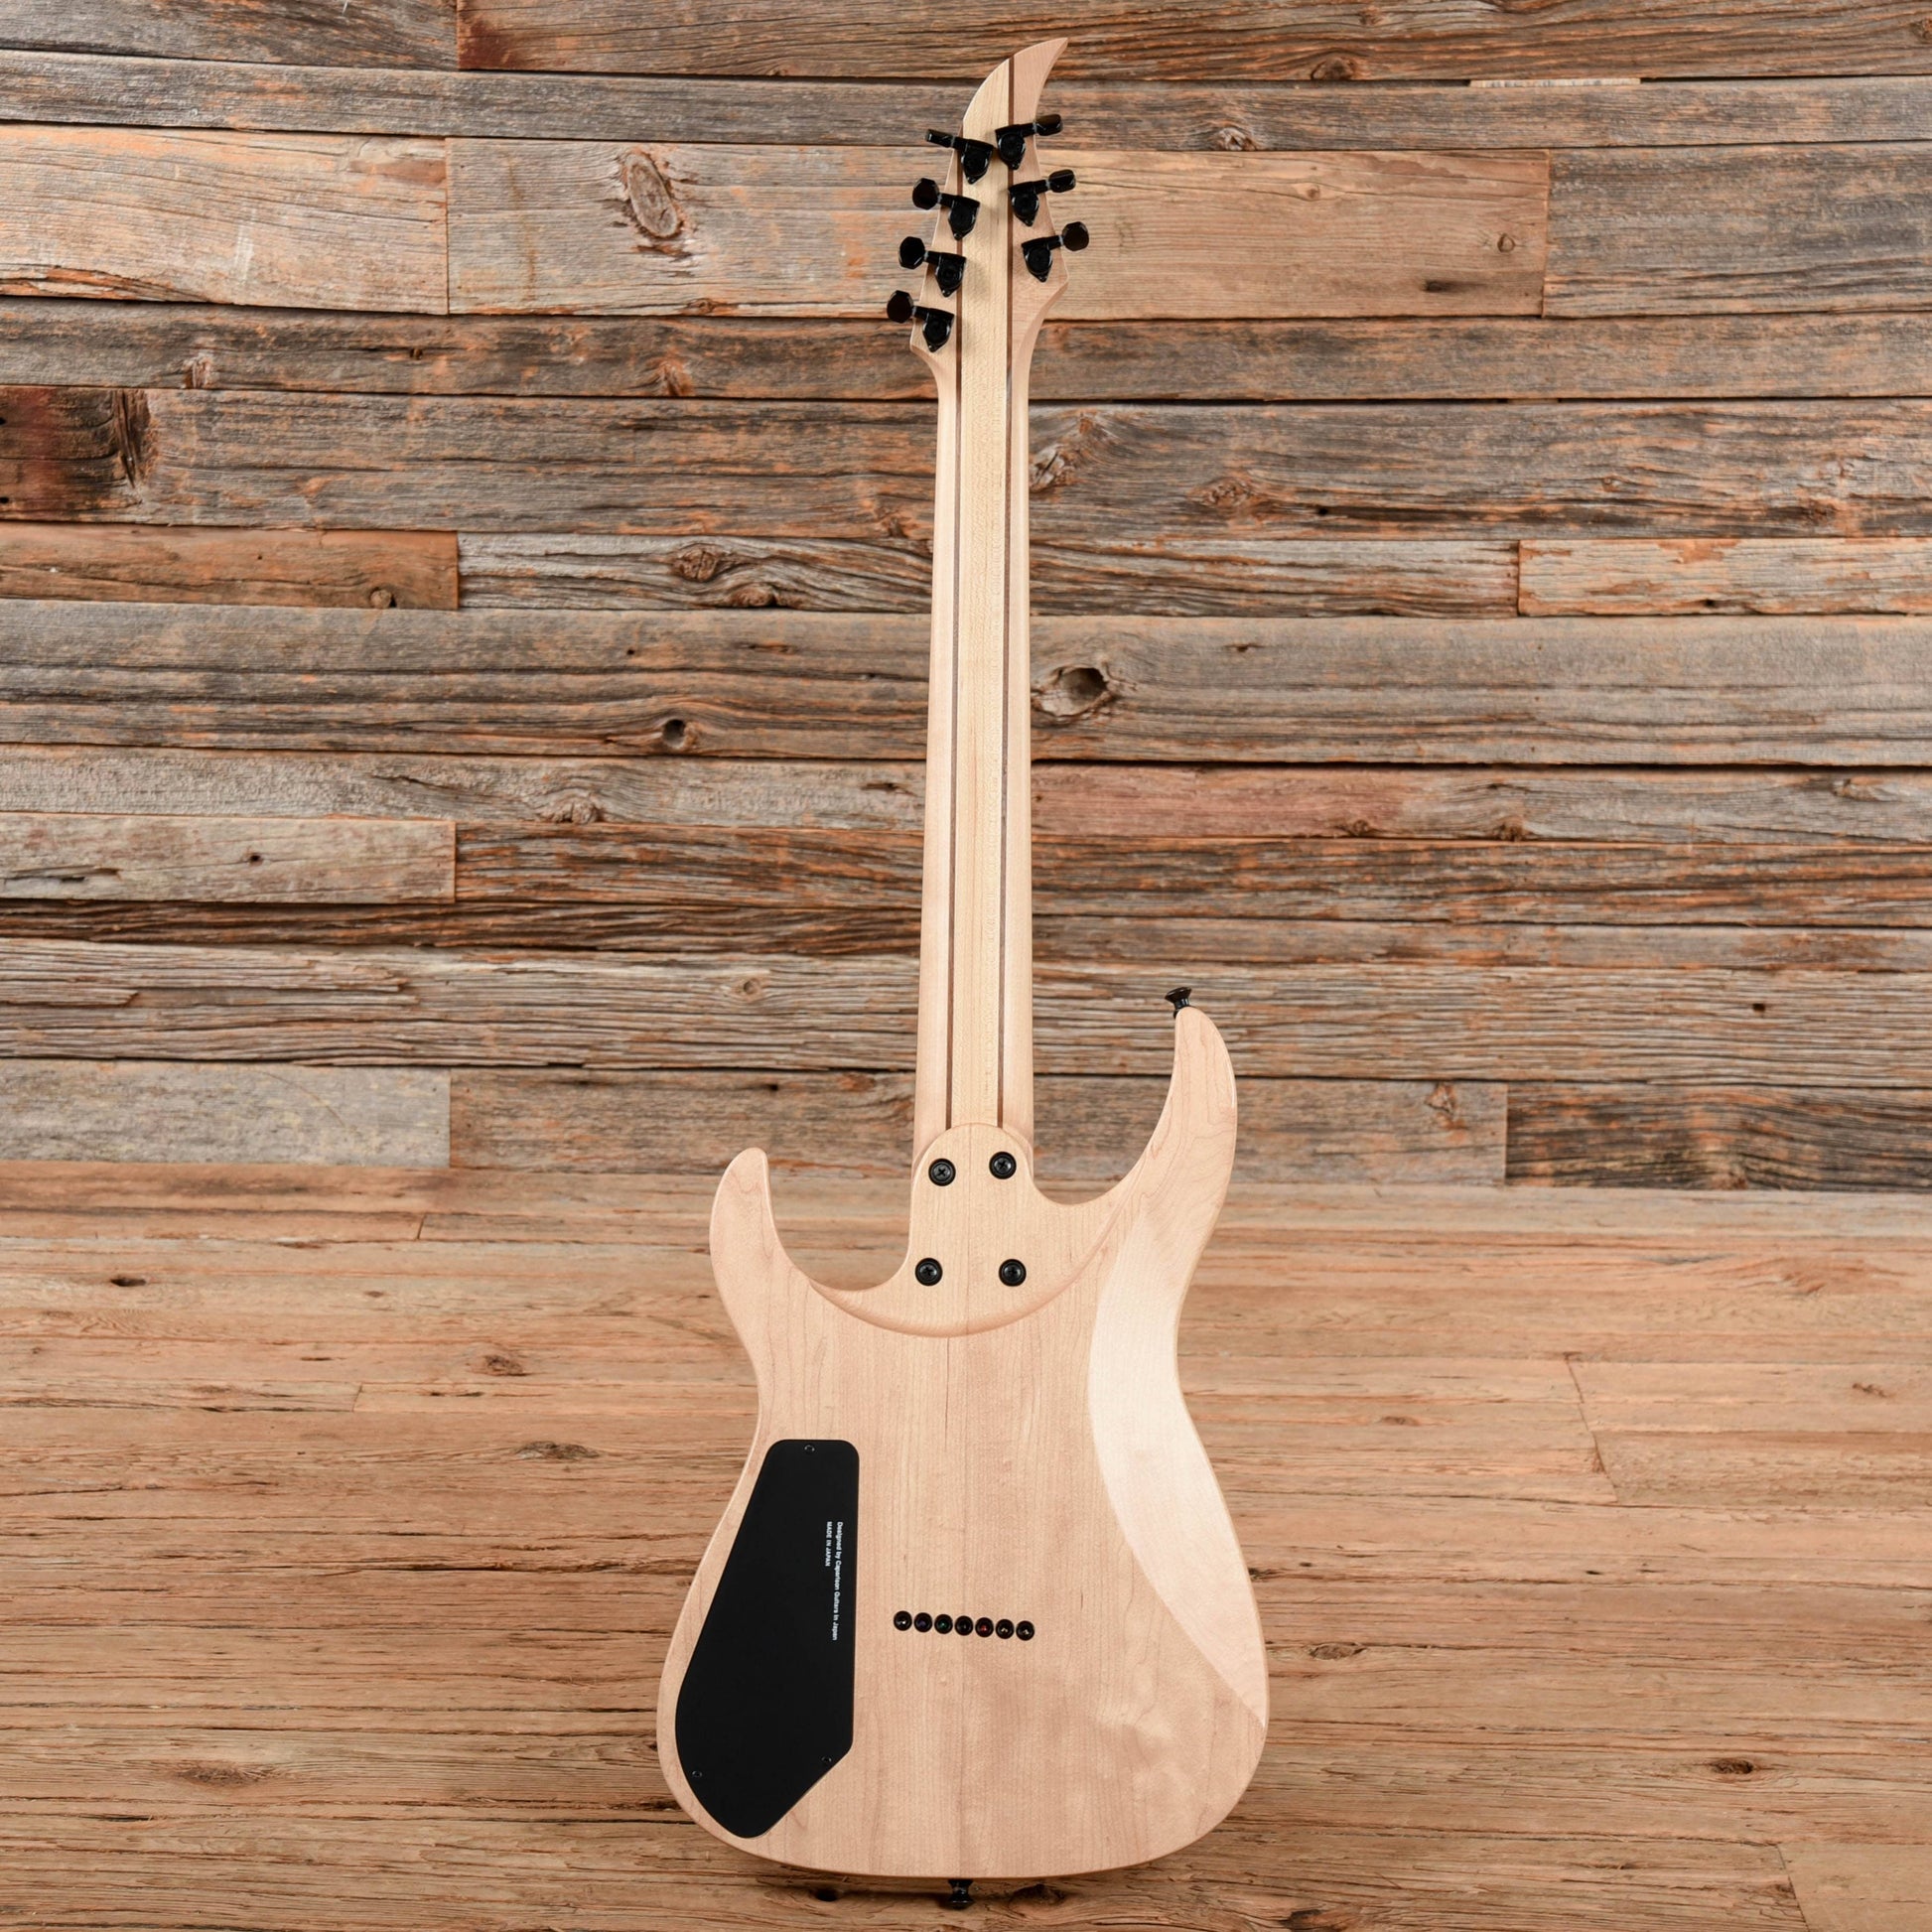 Caparison Dellinger 7 FX AM Natural Electric Guitars / Solid Body